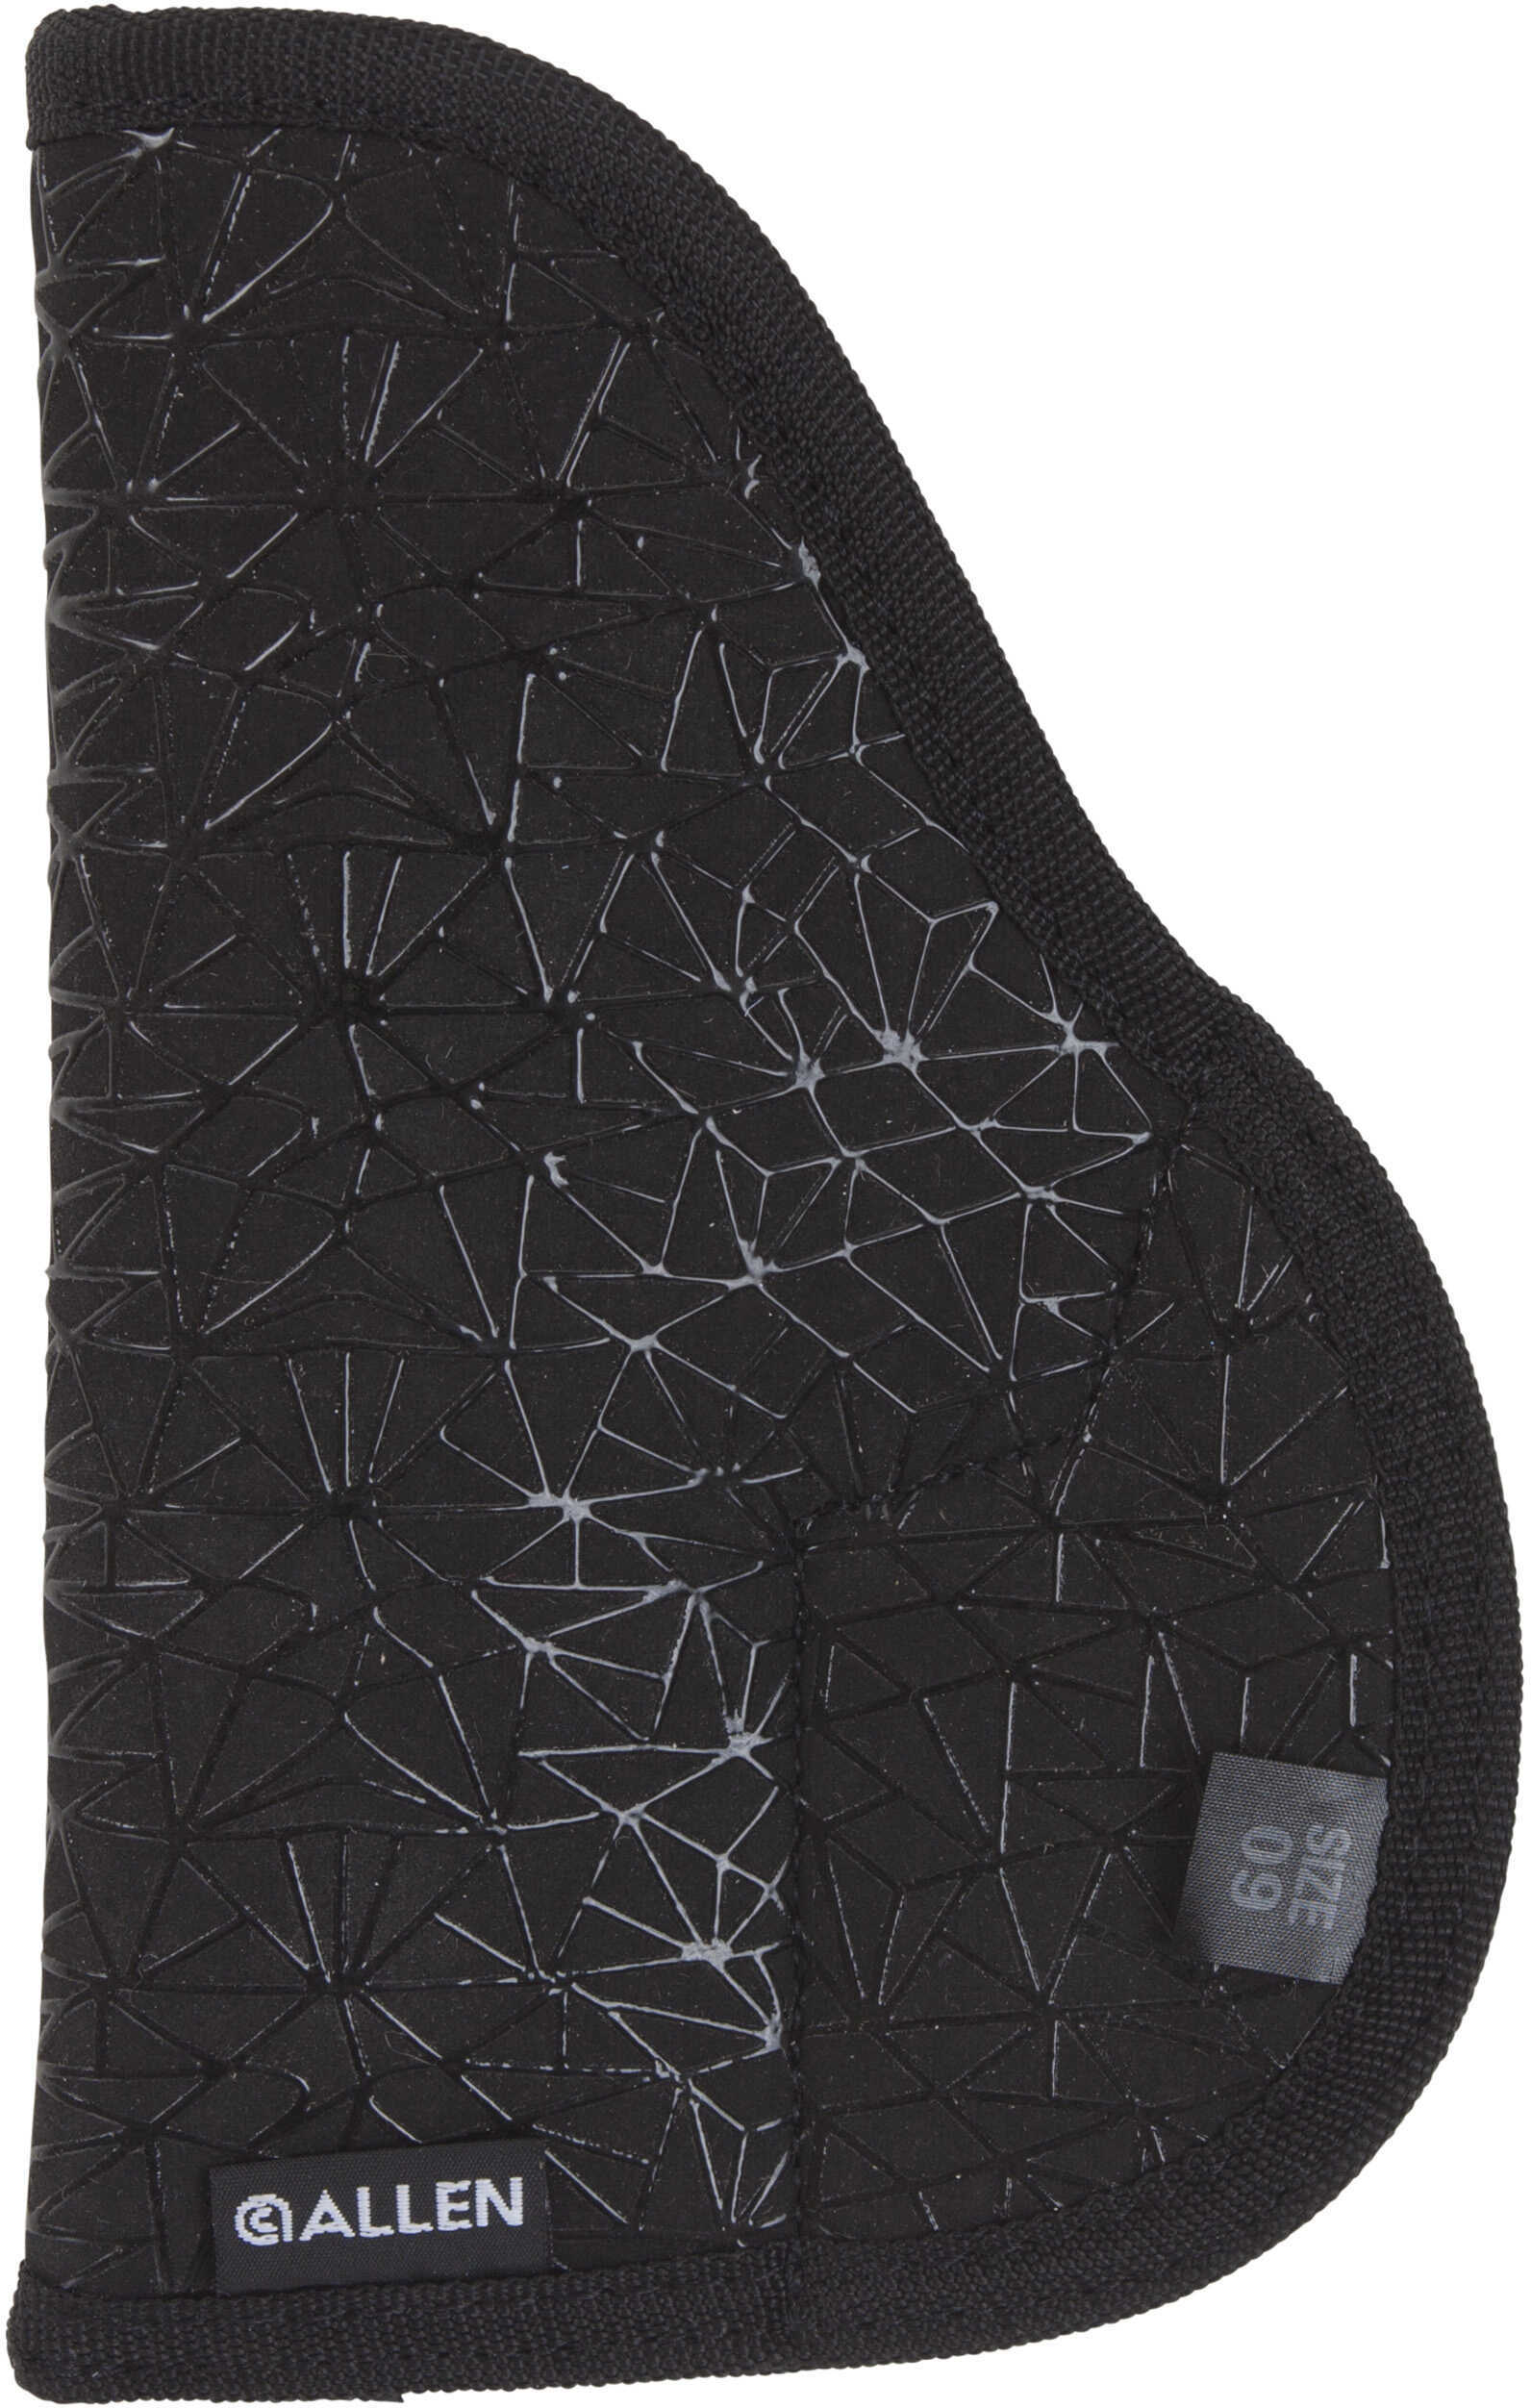 Allen Spiderweb Pocket Holster for Walther PPK, Bersa 380, Black, Size 09